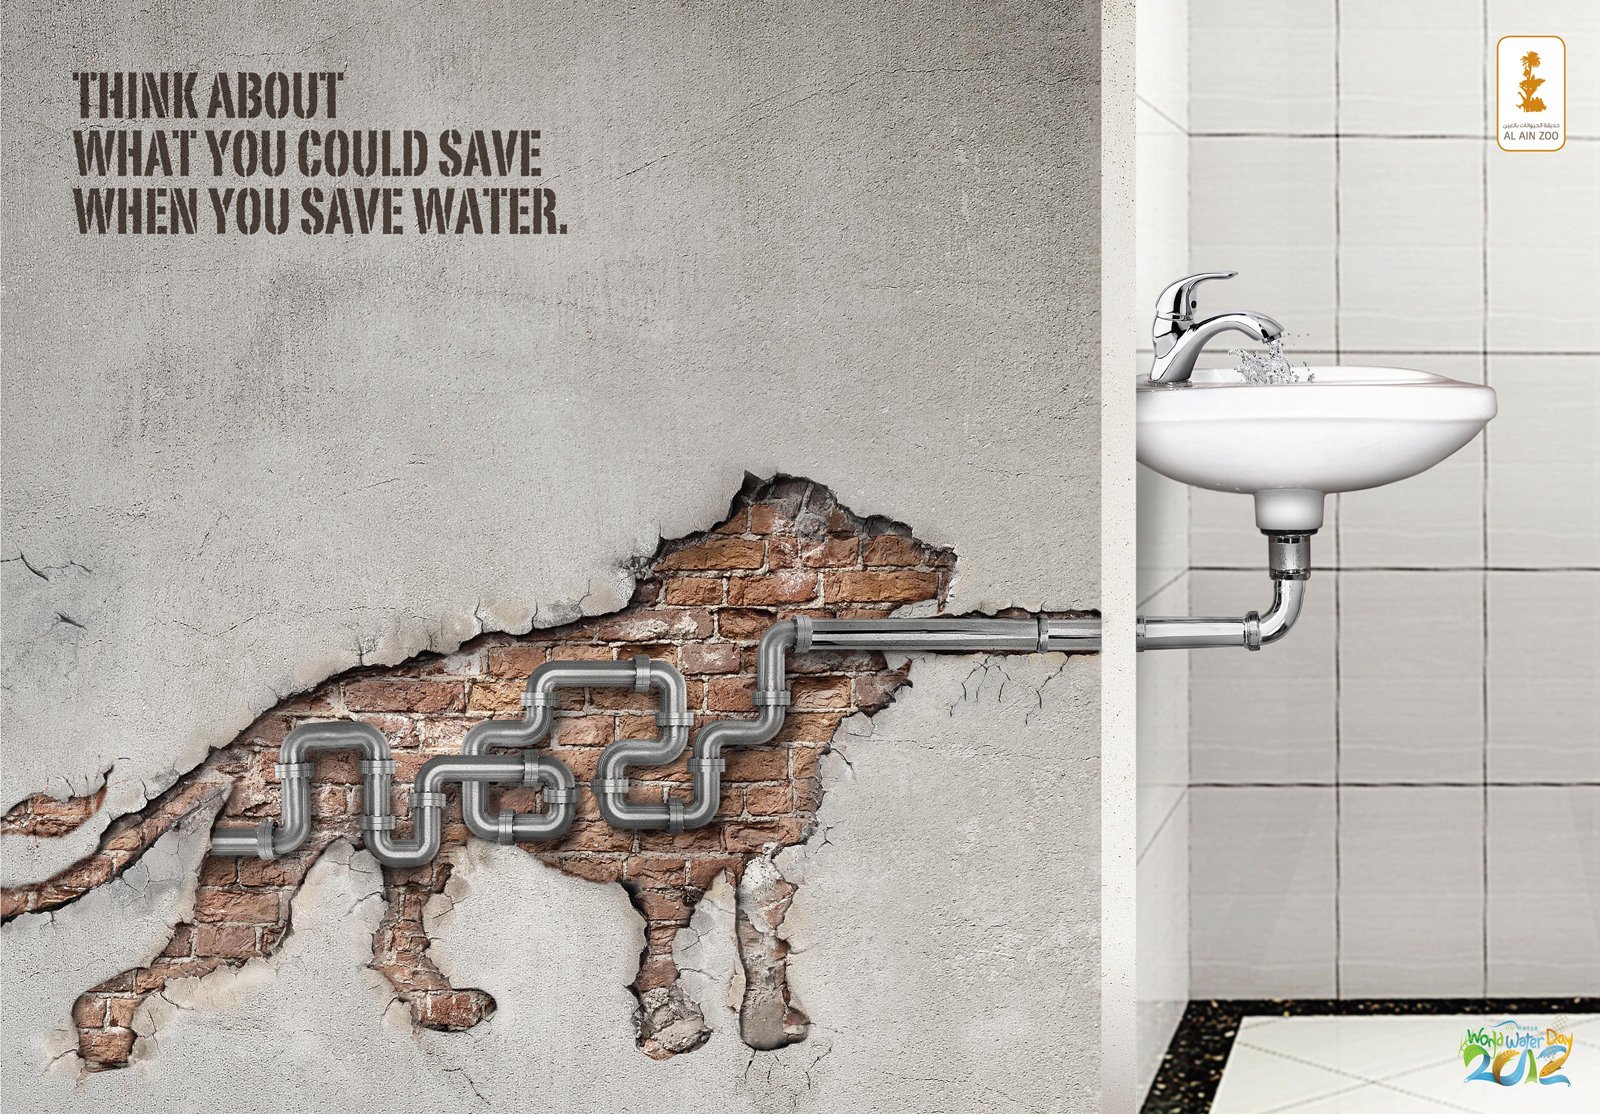 sawe-water-campaign